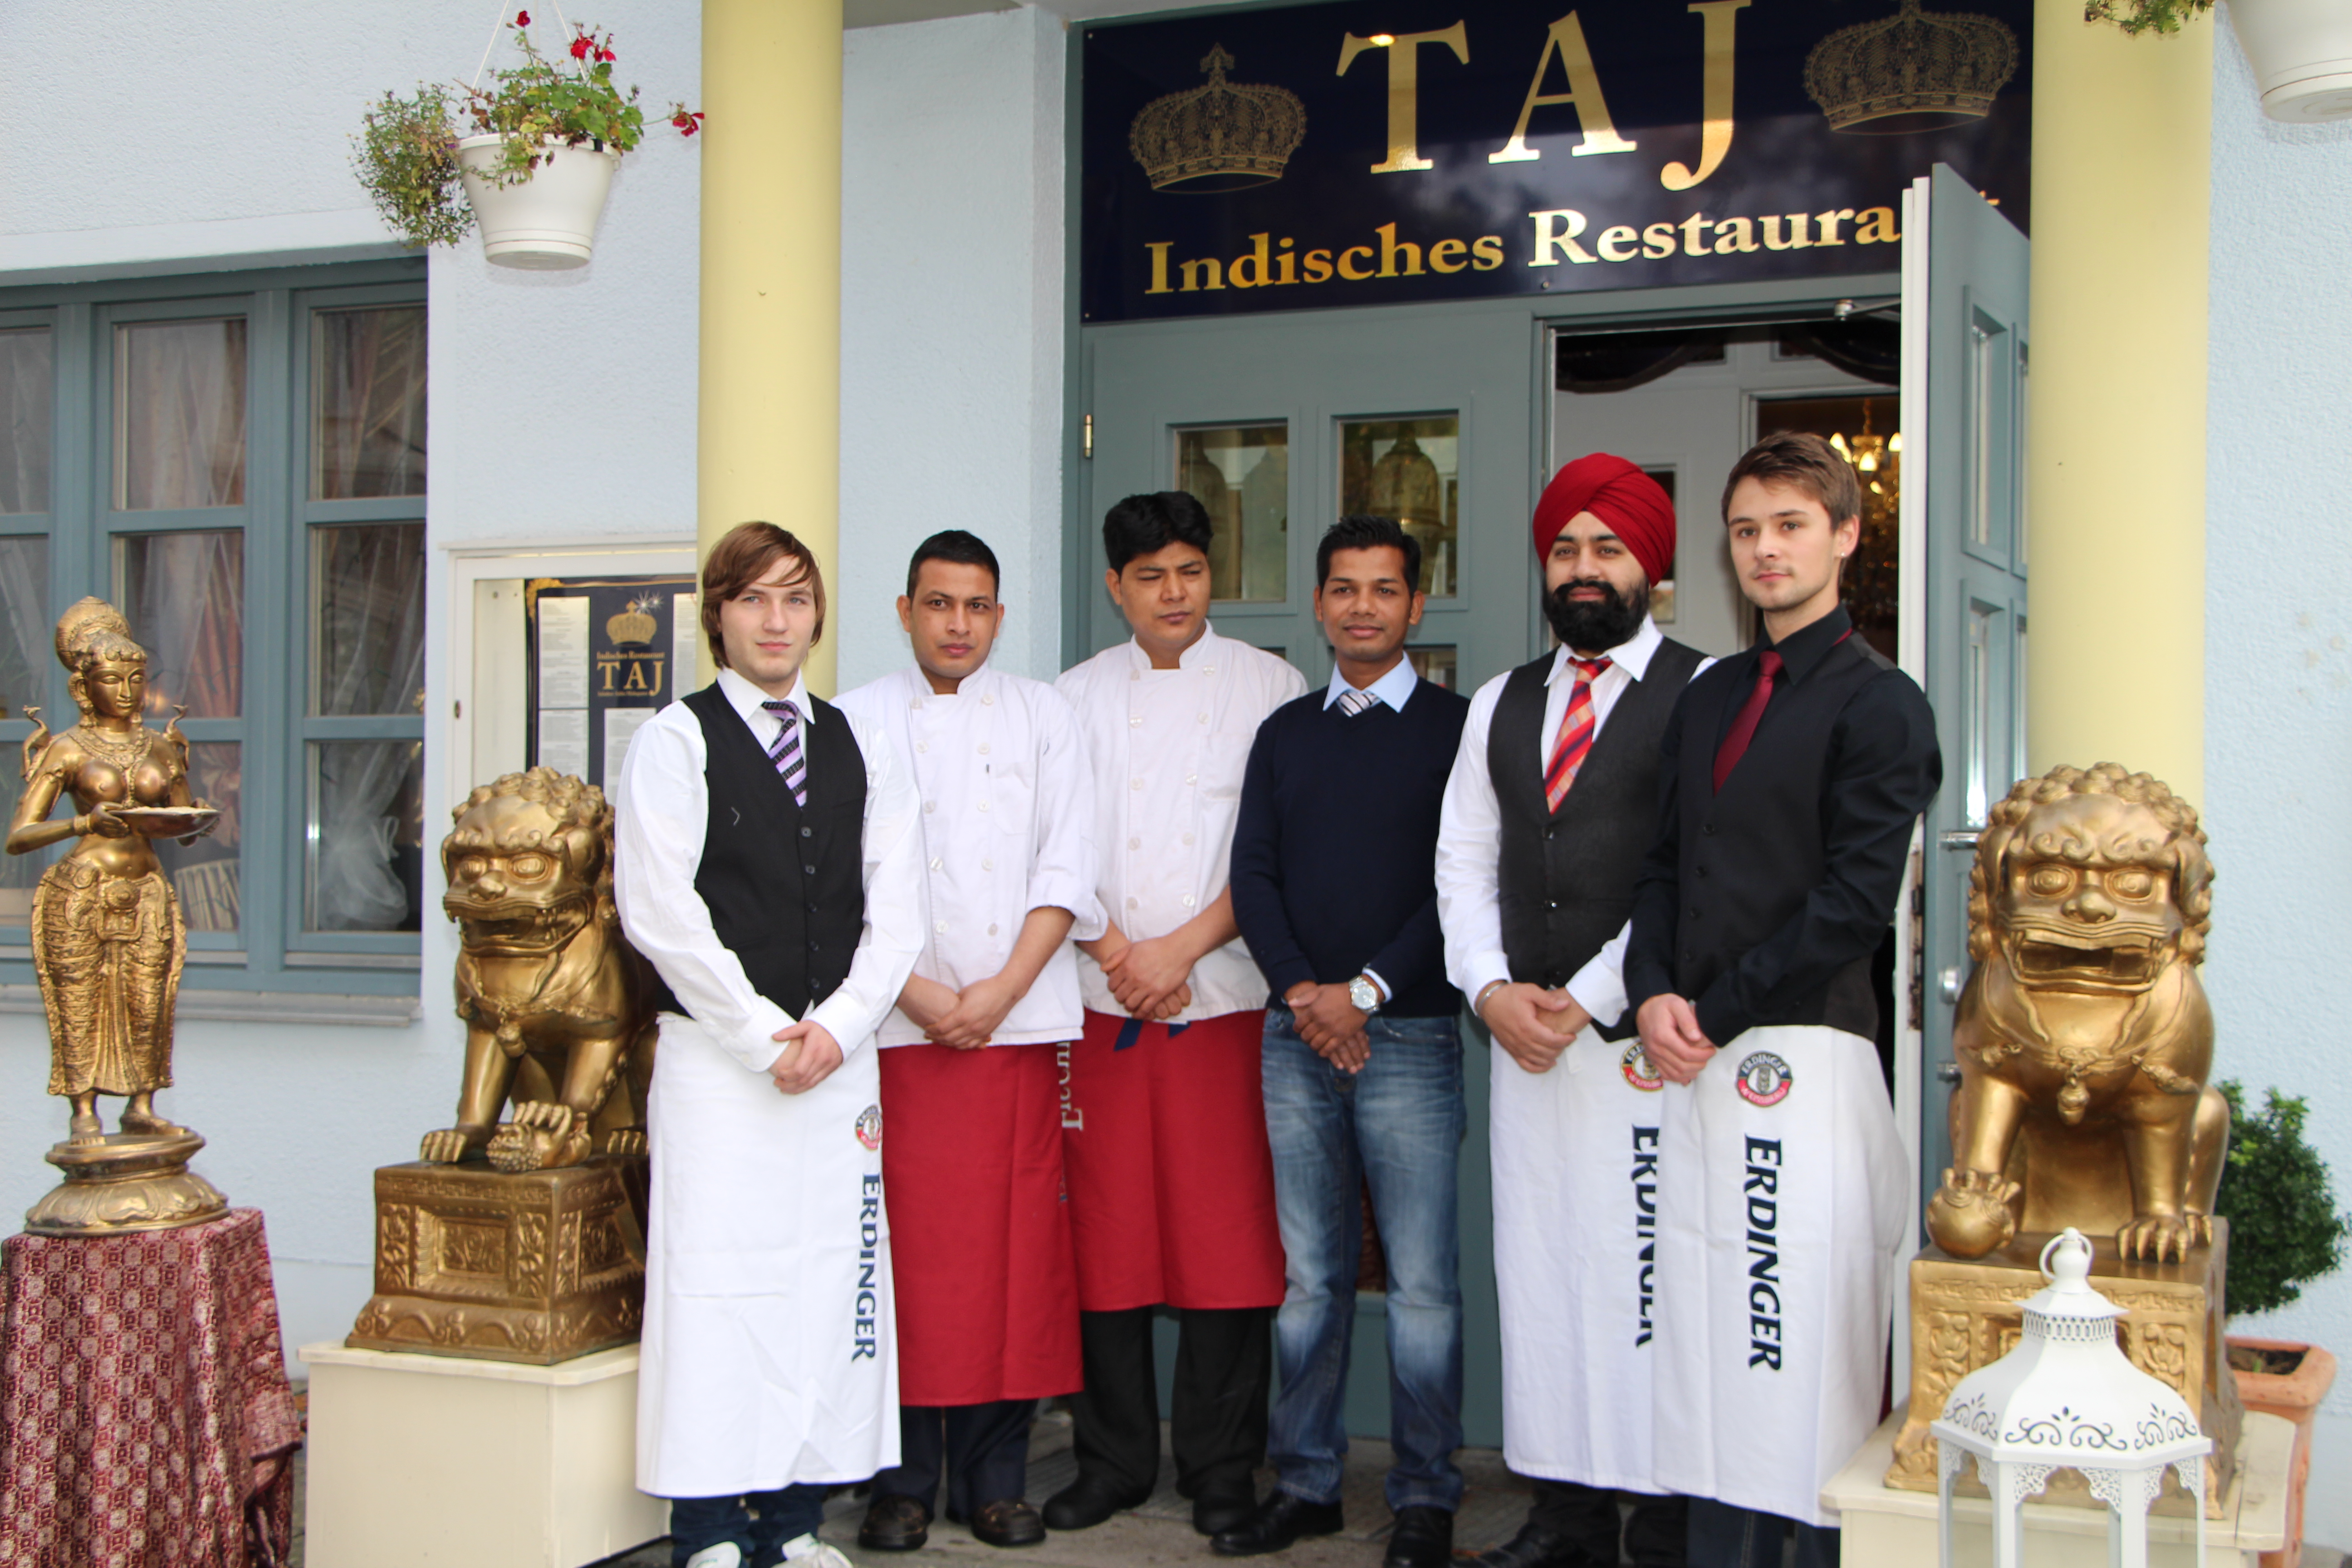 Bild 17 Mohapatra Indisches Restaurant Taj Ashis Ranjan in Erding